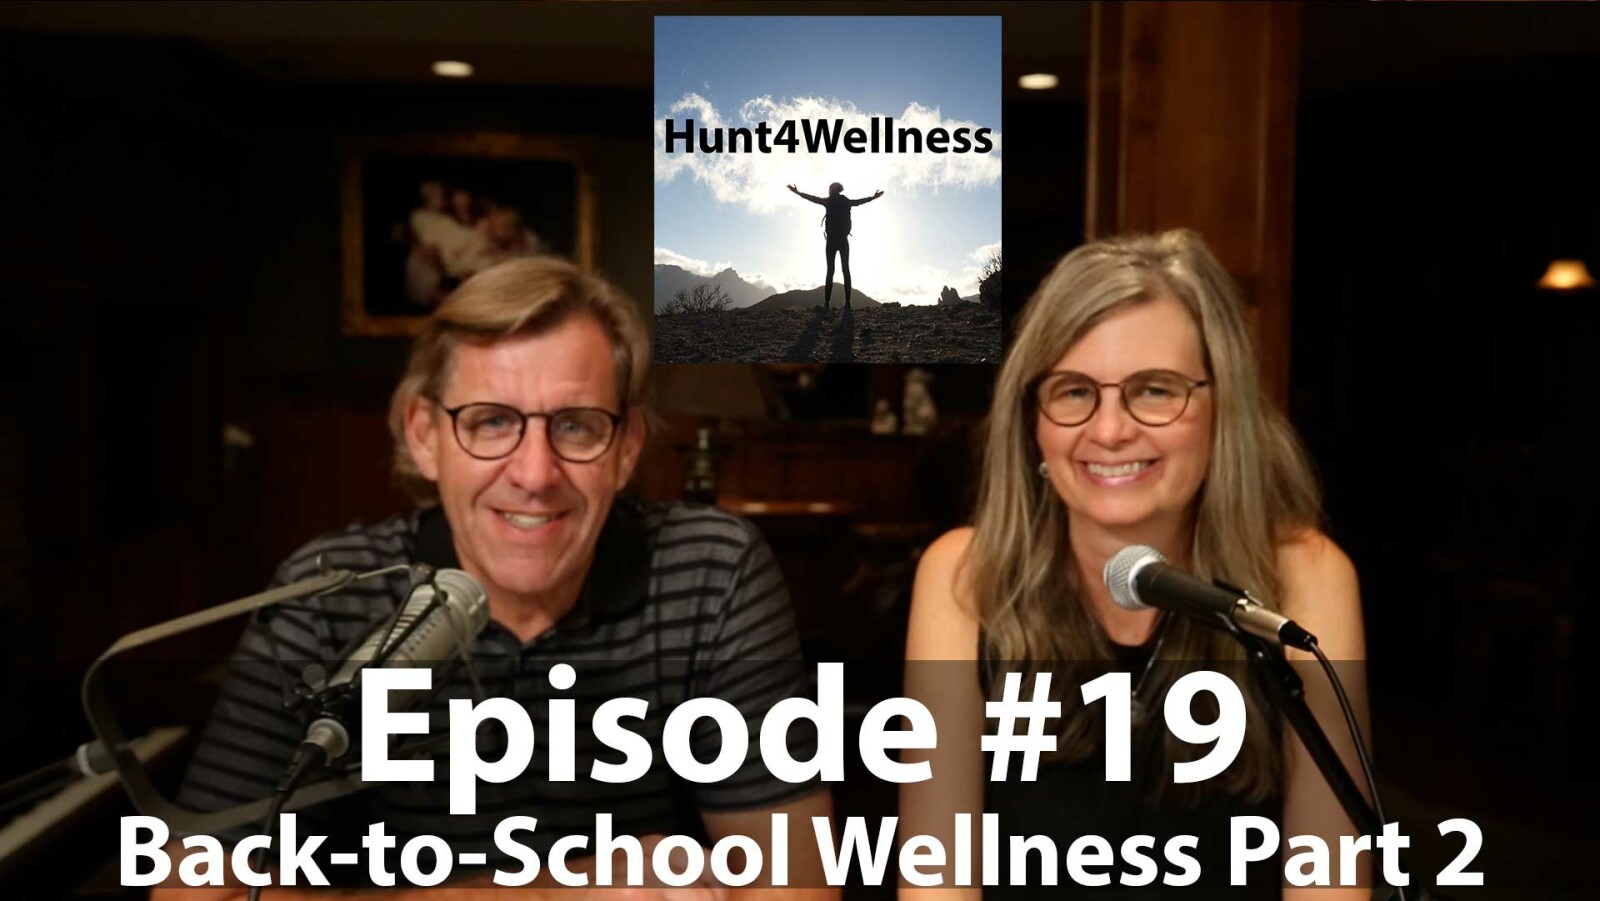 Episode #19 - Back-to-School Wellness Part 2